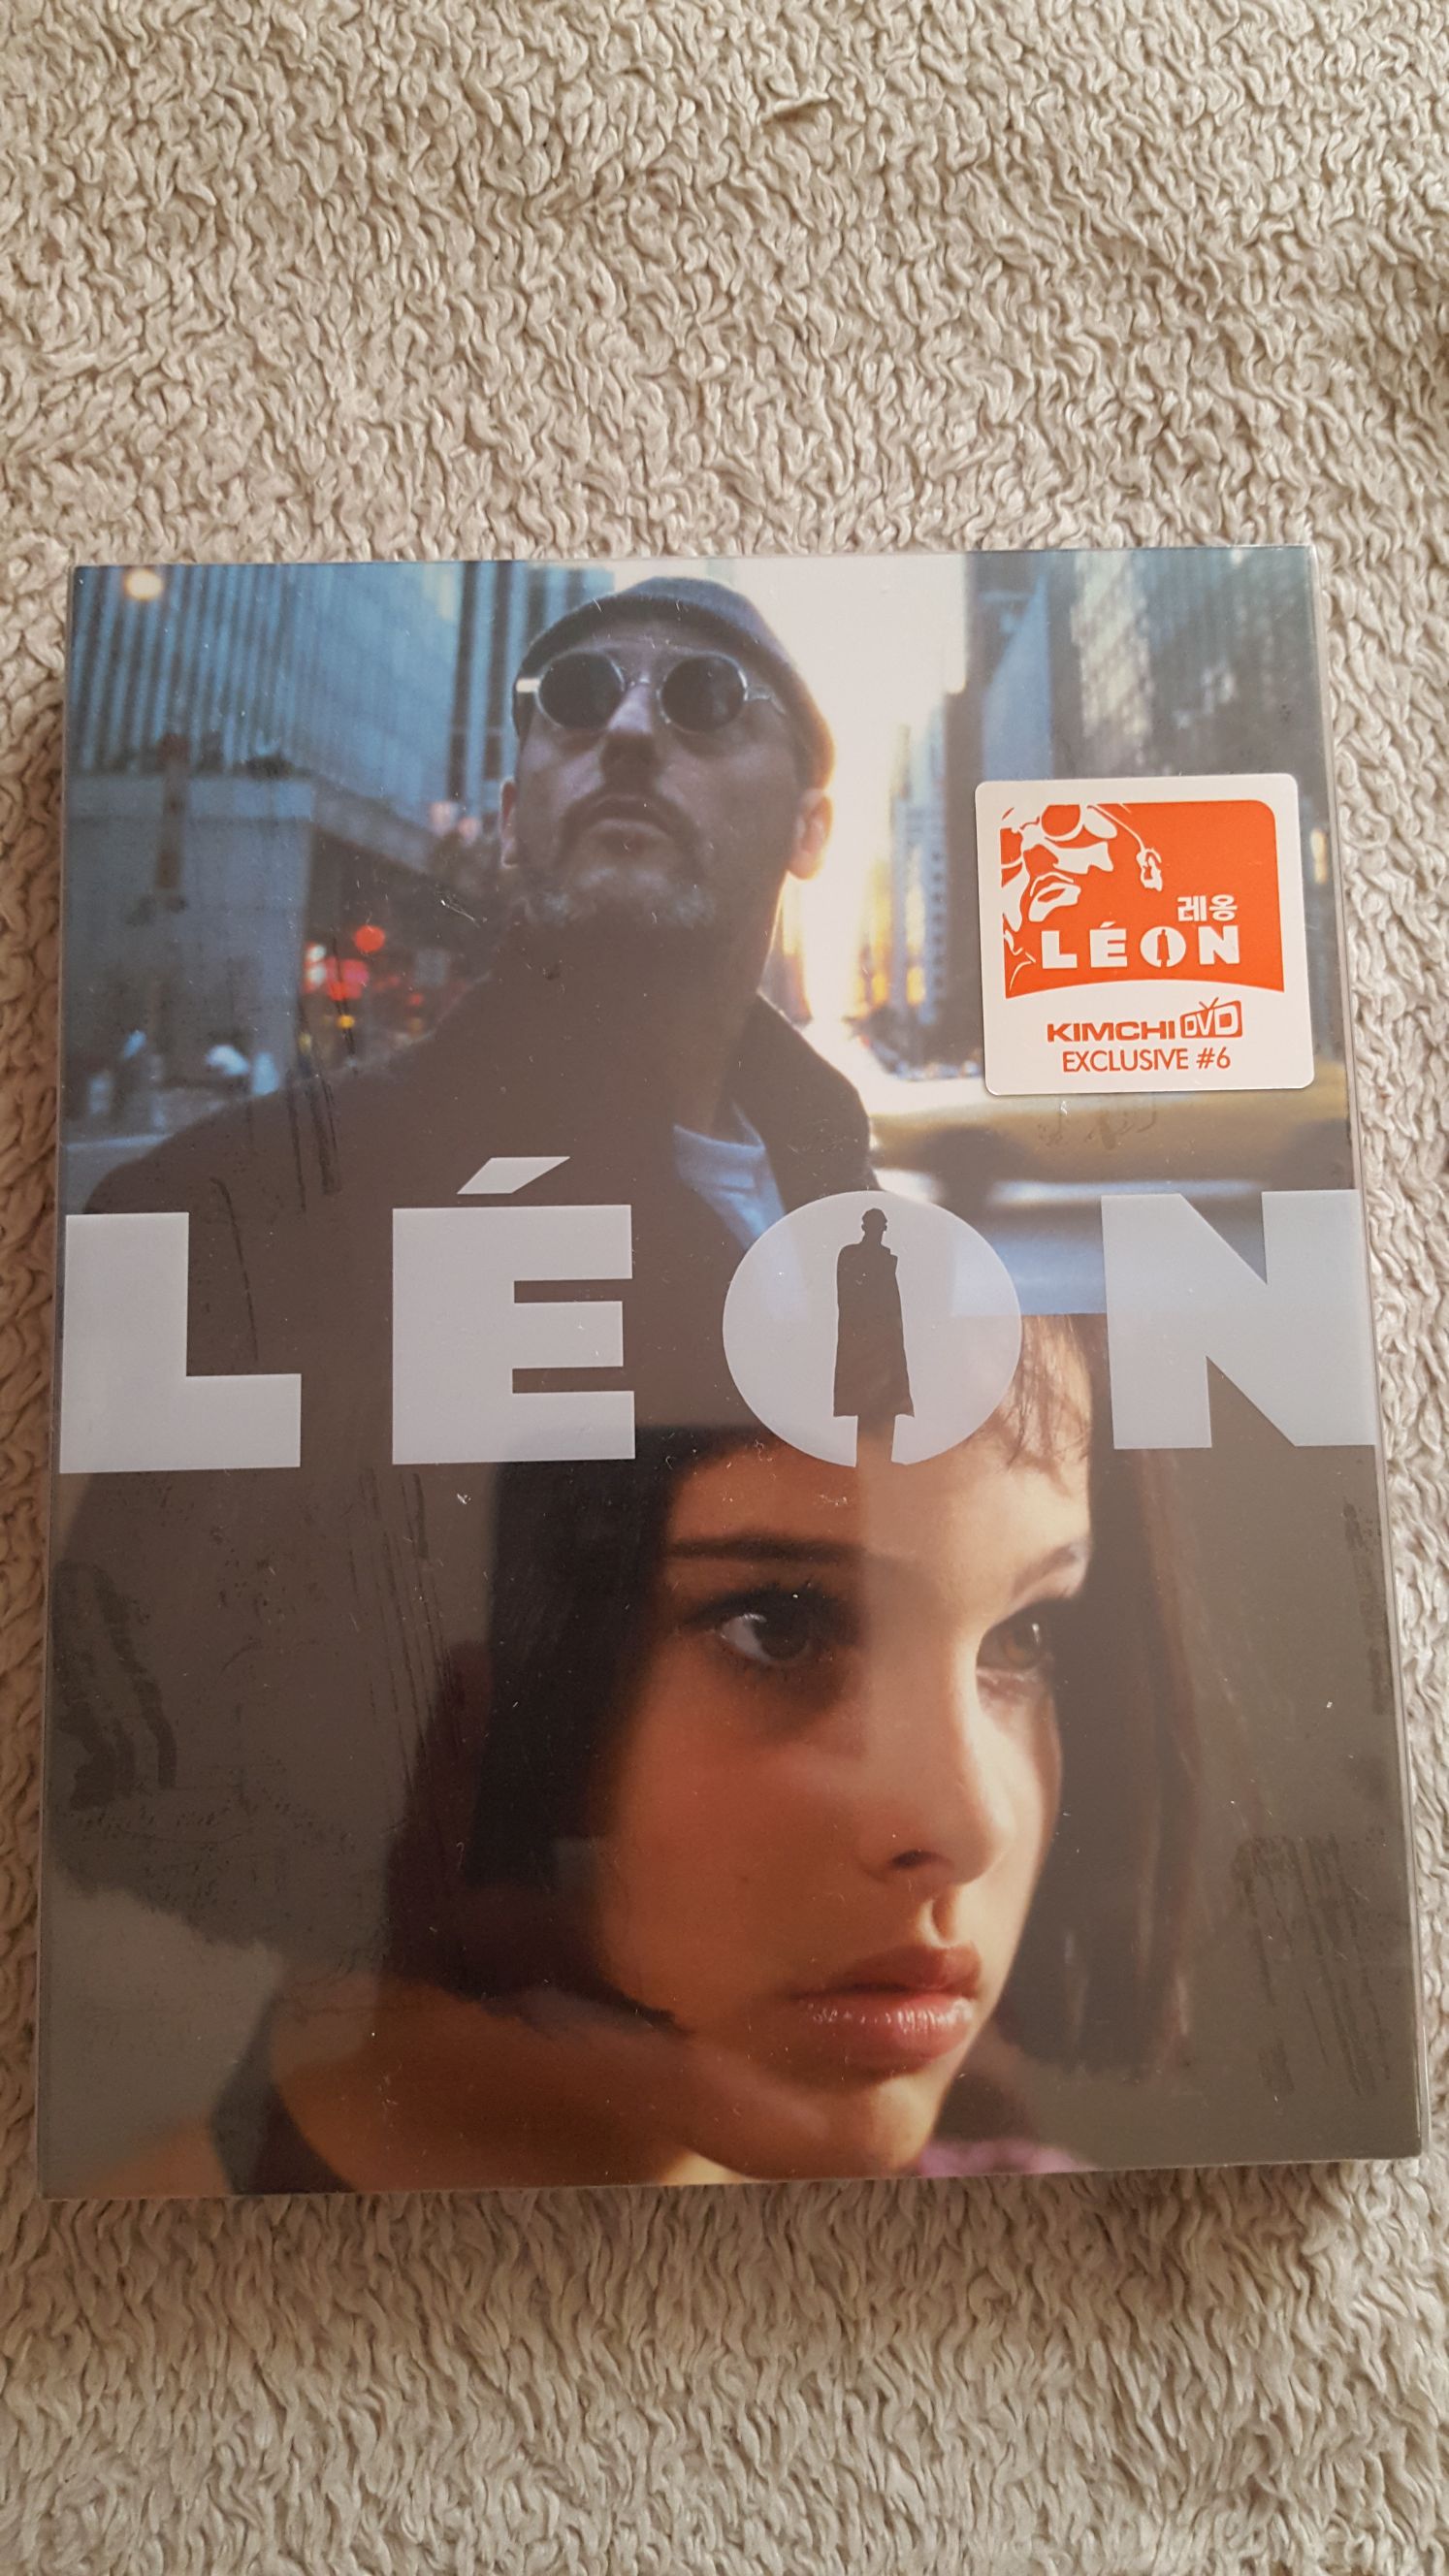 Leon 1.jpg